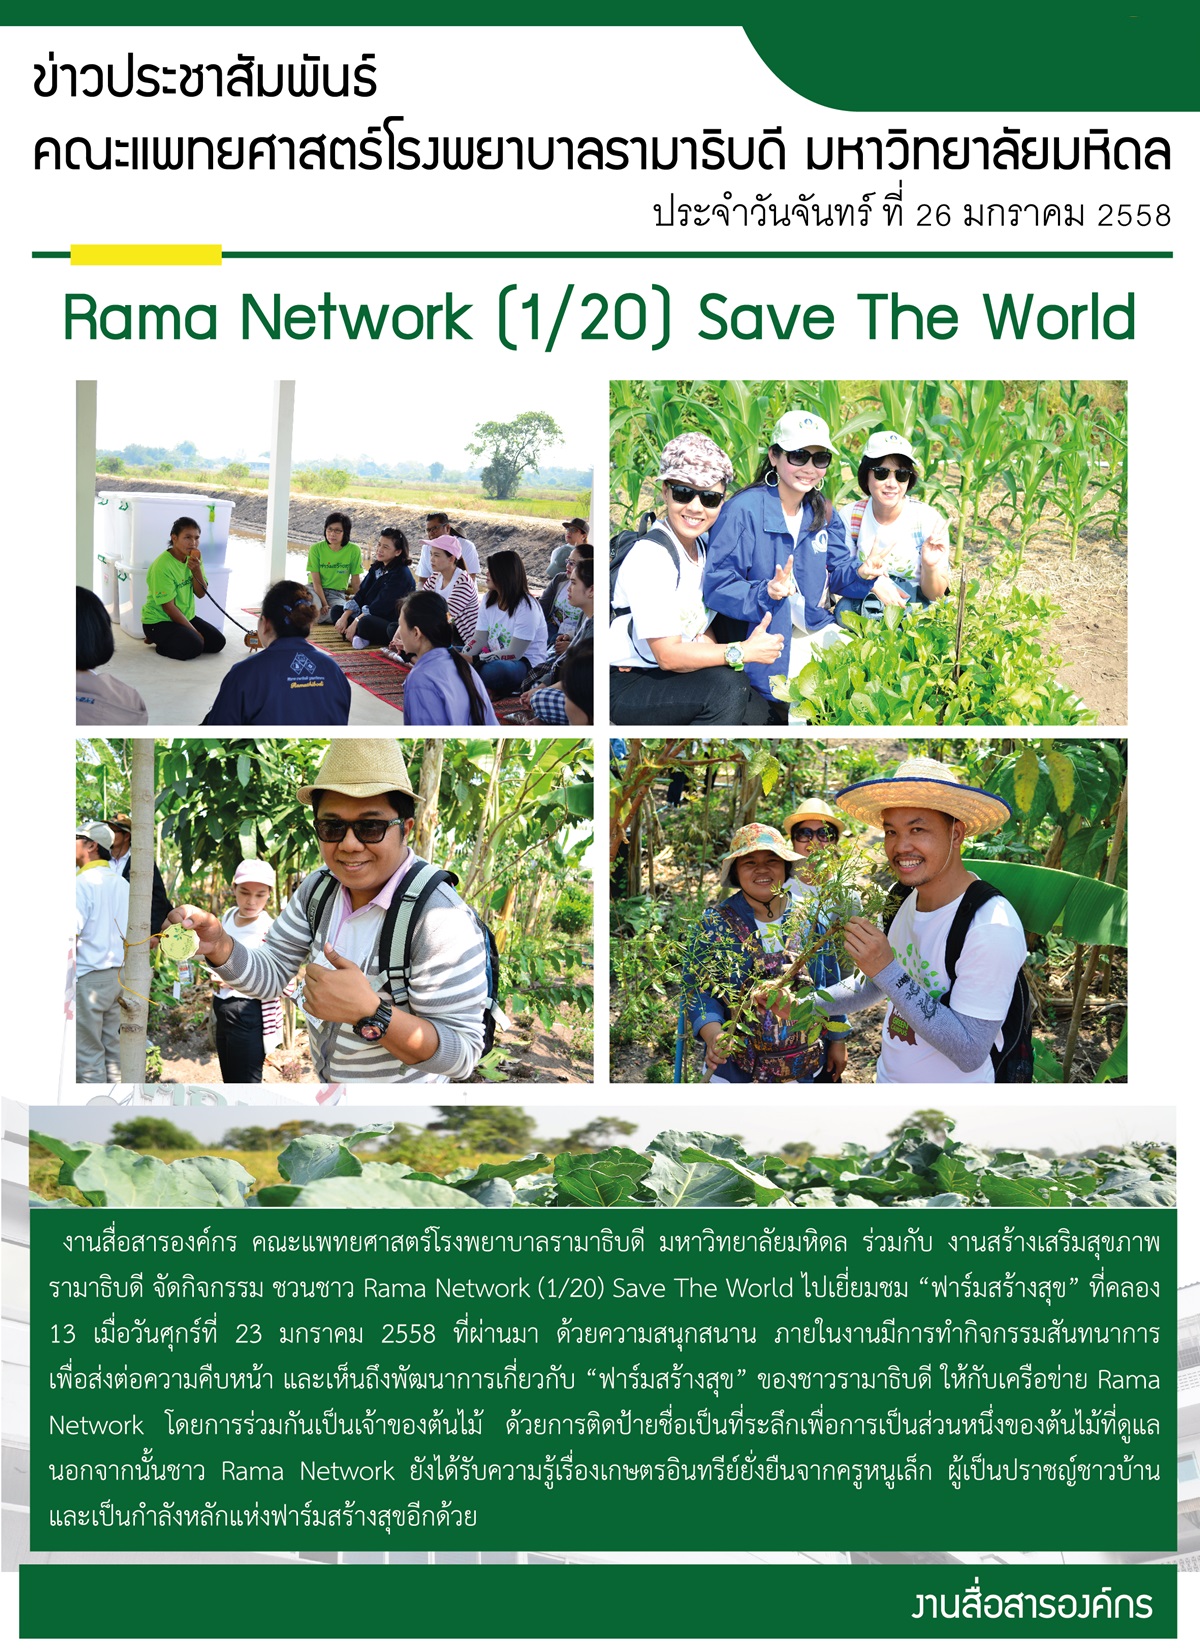 Rama Network (1/20) Save The World 